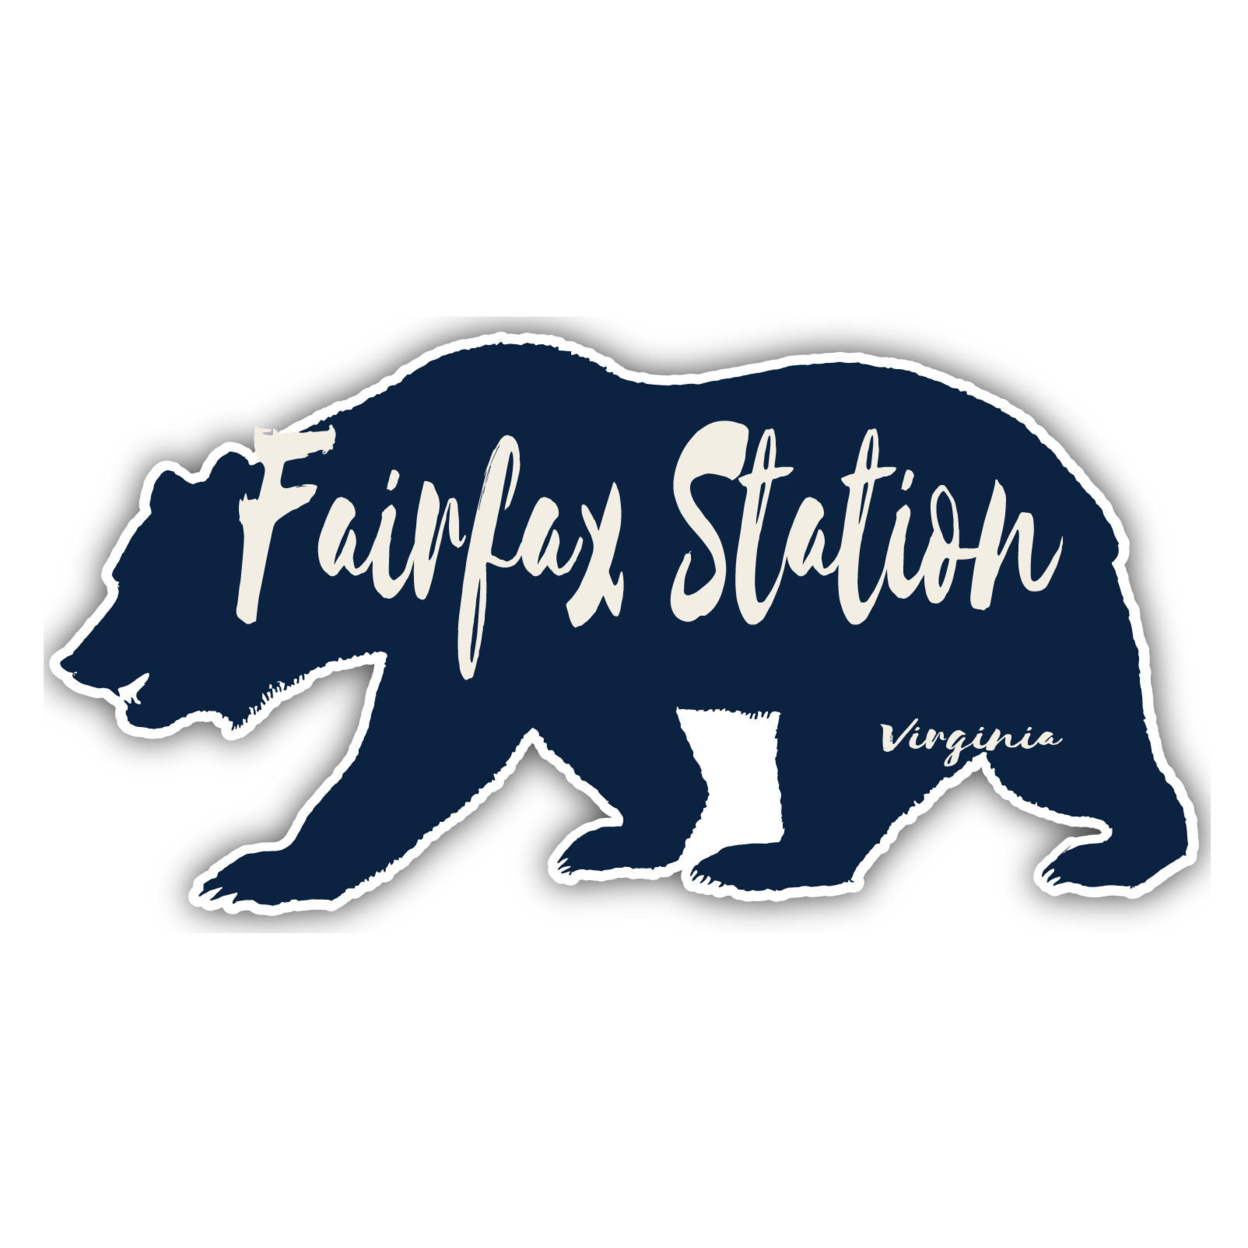 Fairfax Station Virginia Souvenir Decorative Stickers (Choose Theme And Size) - Single Unit, 4-Inch, Bear